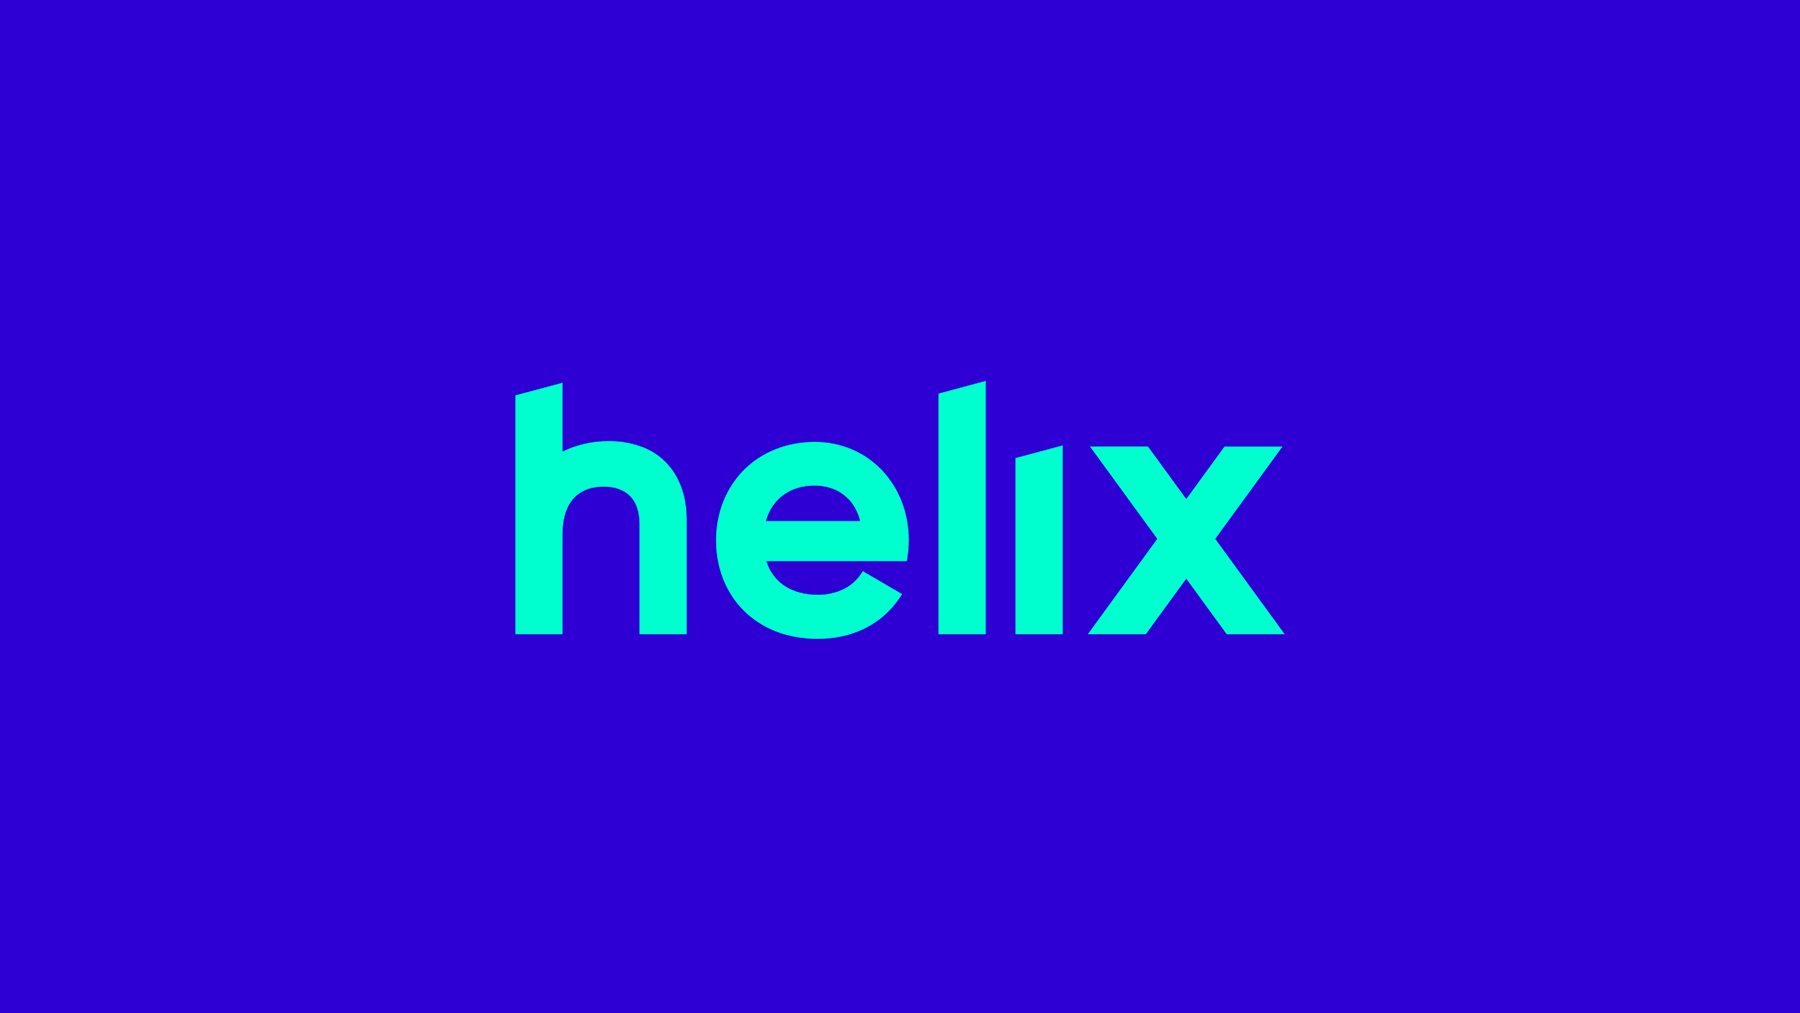 Helix brand identity design.